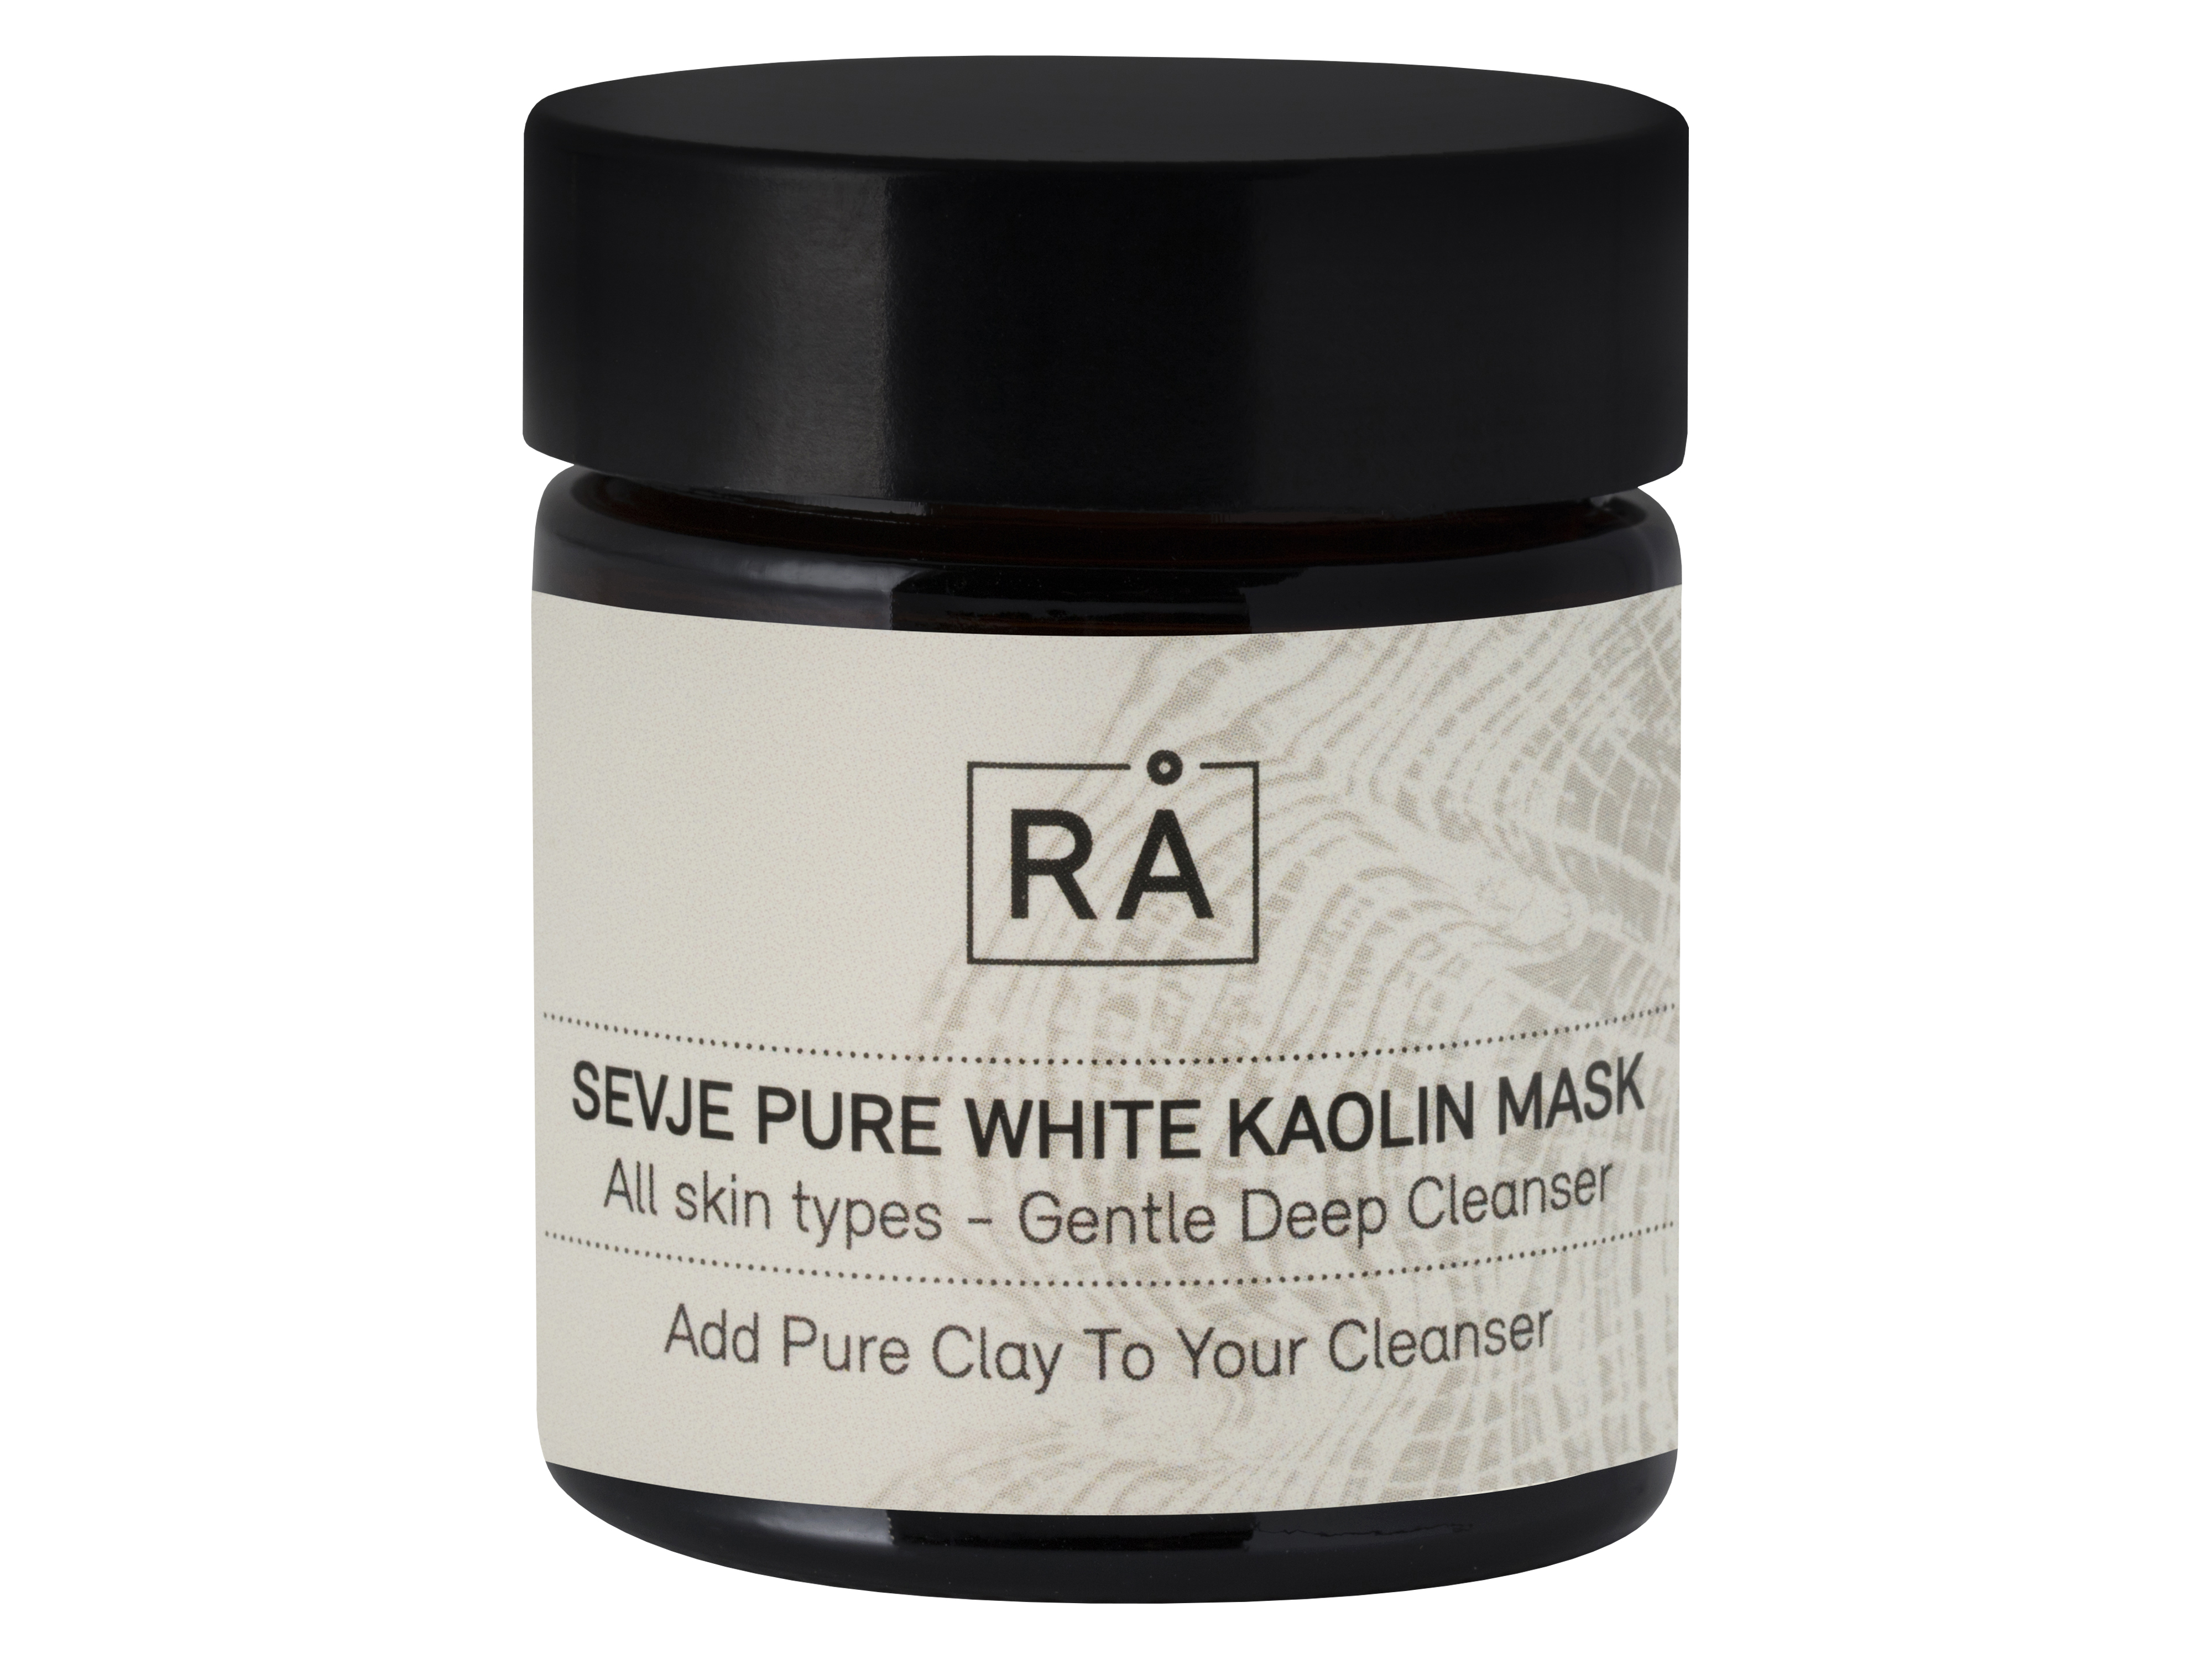 RÅ Sevje Pure White Kaolin Mask, 100 ml